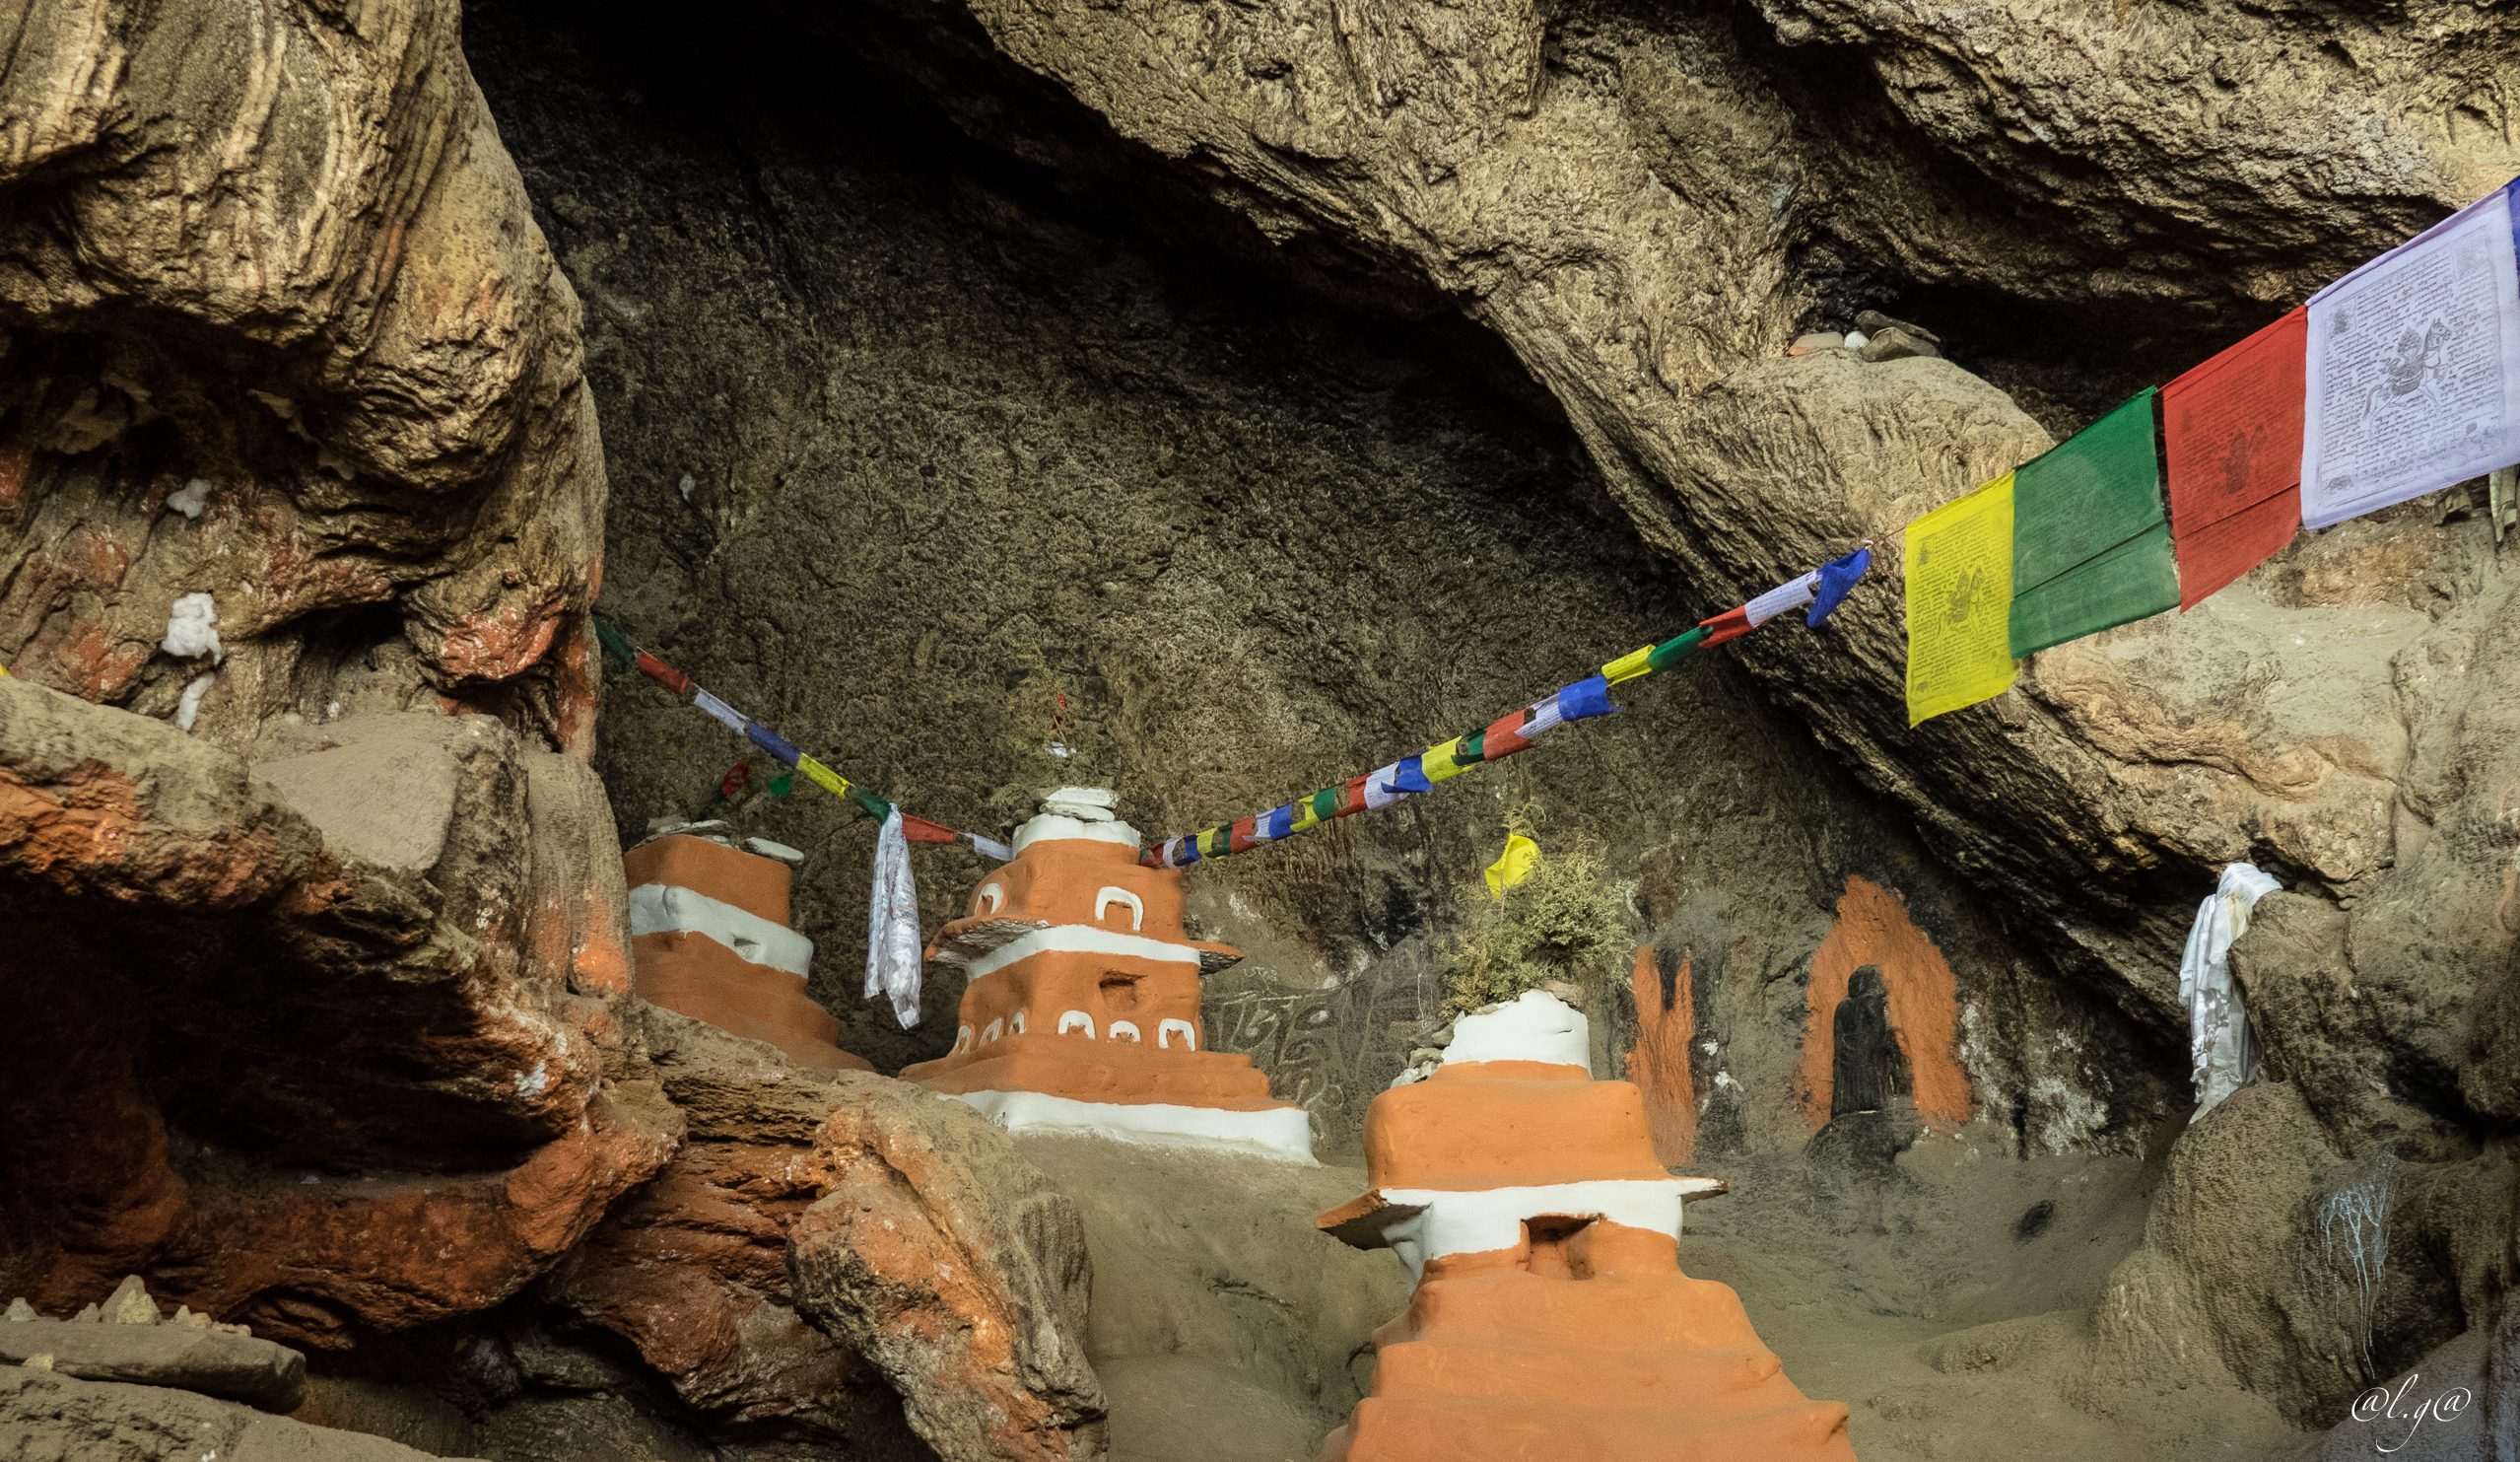 Chungsi Cave (3440m) : Grotte ayant accueilli Padma Sambhava dit Guru Rimpoche